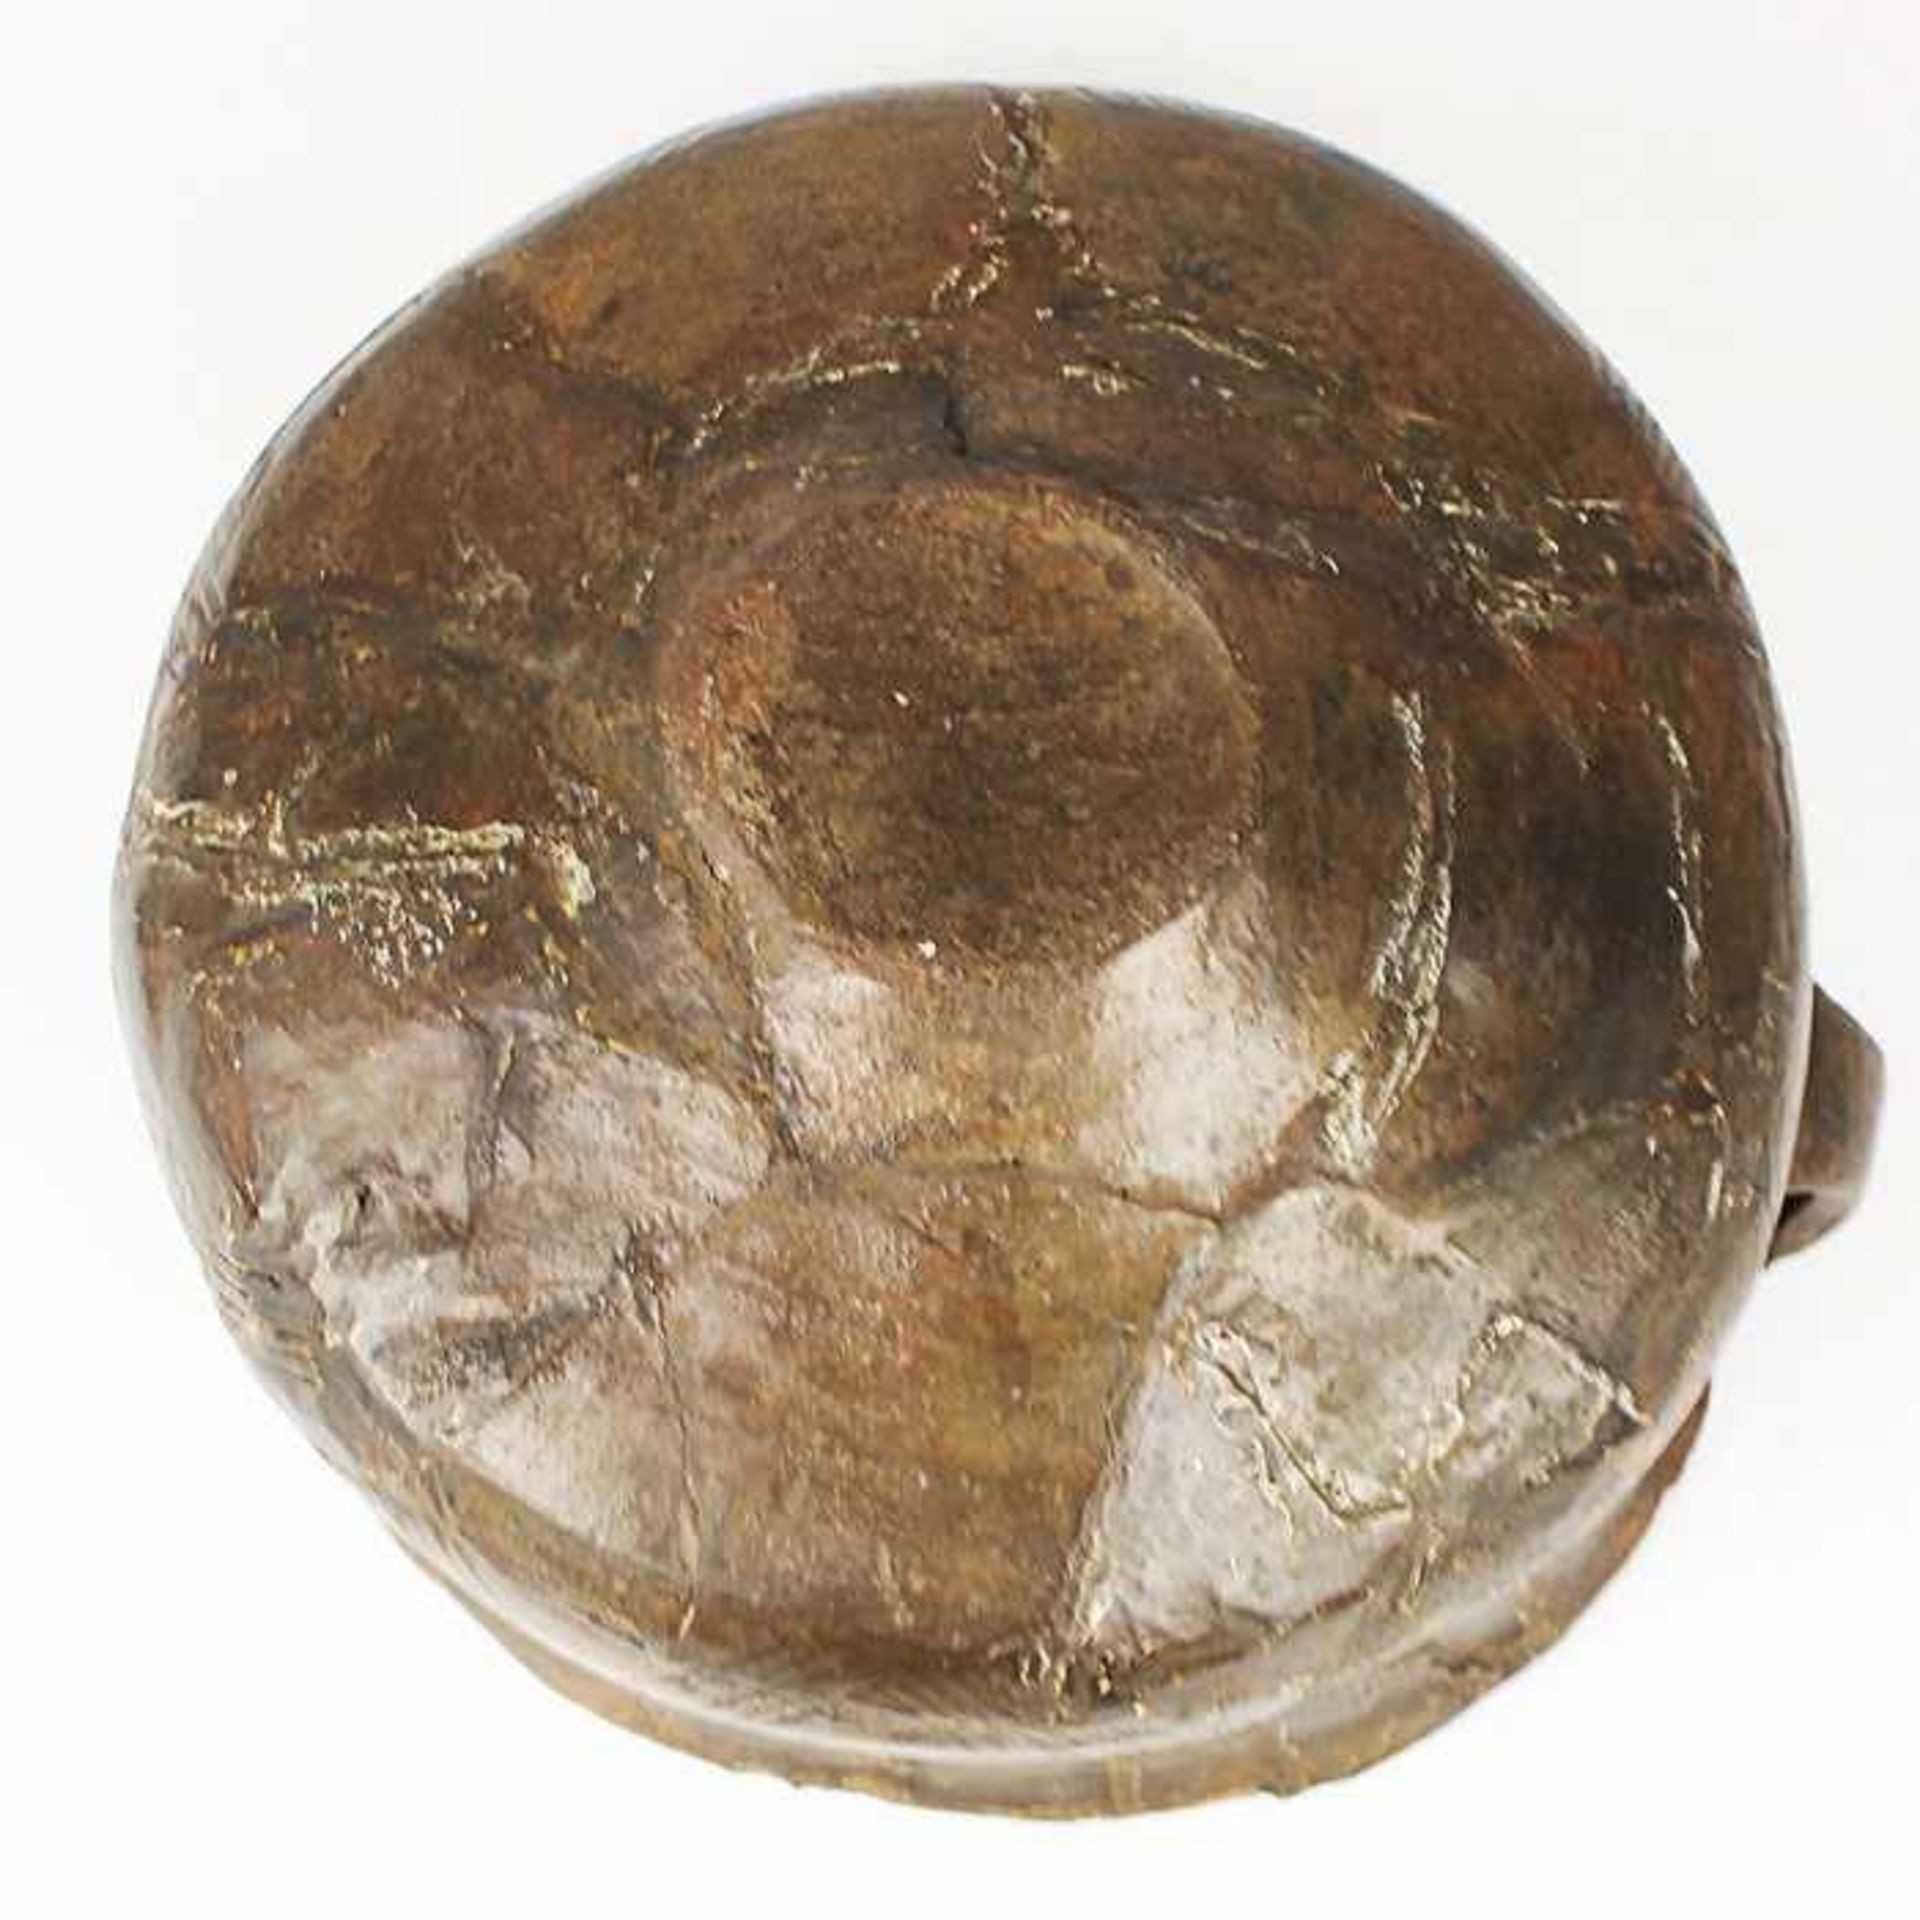 TrinkgefäßNeolithikum, um 4000 v. Chr., Arborner Kulturen, Egg Obere Güll (Fundort), brauner Ton, - Bild 3 aus 3